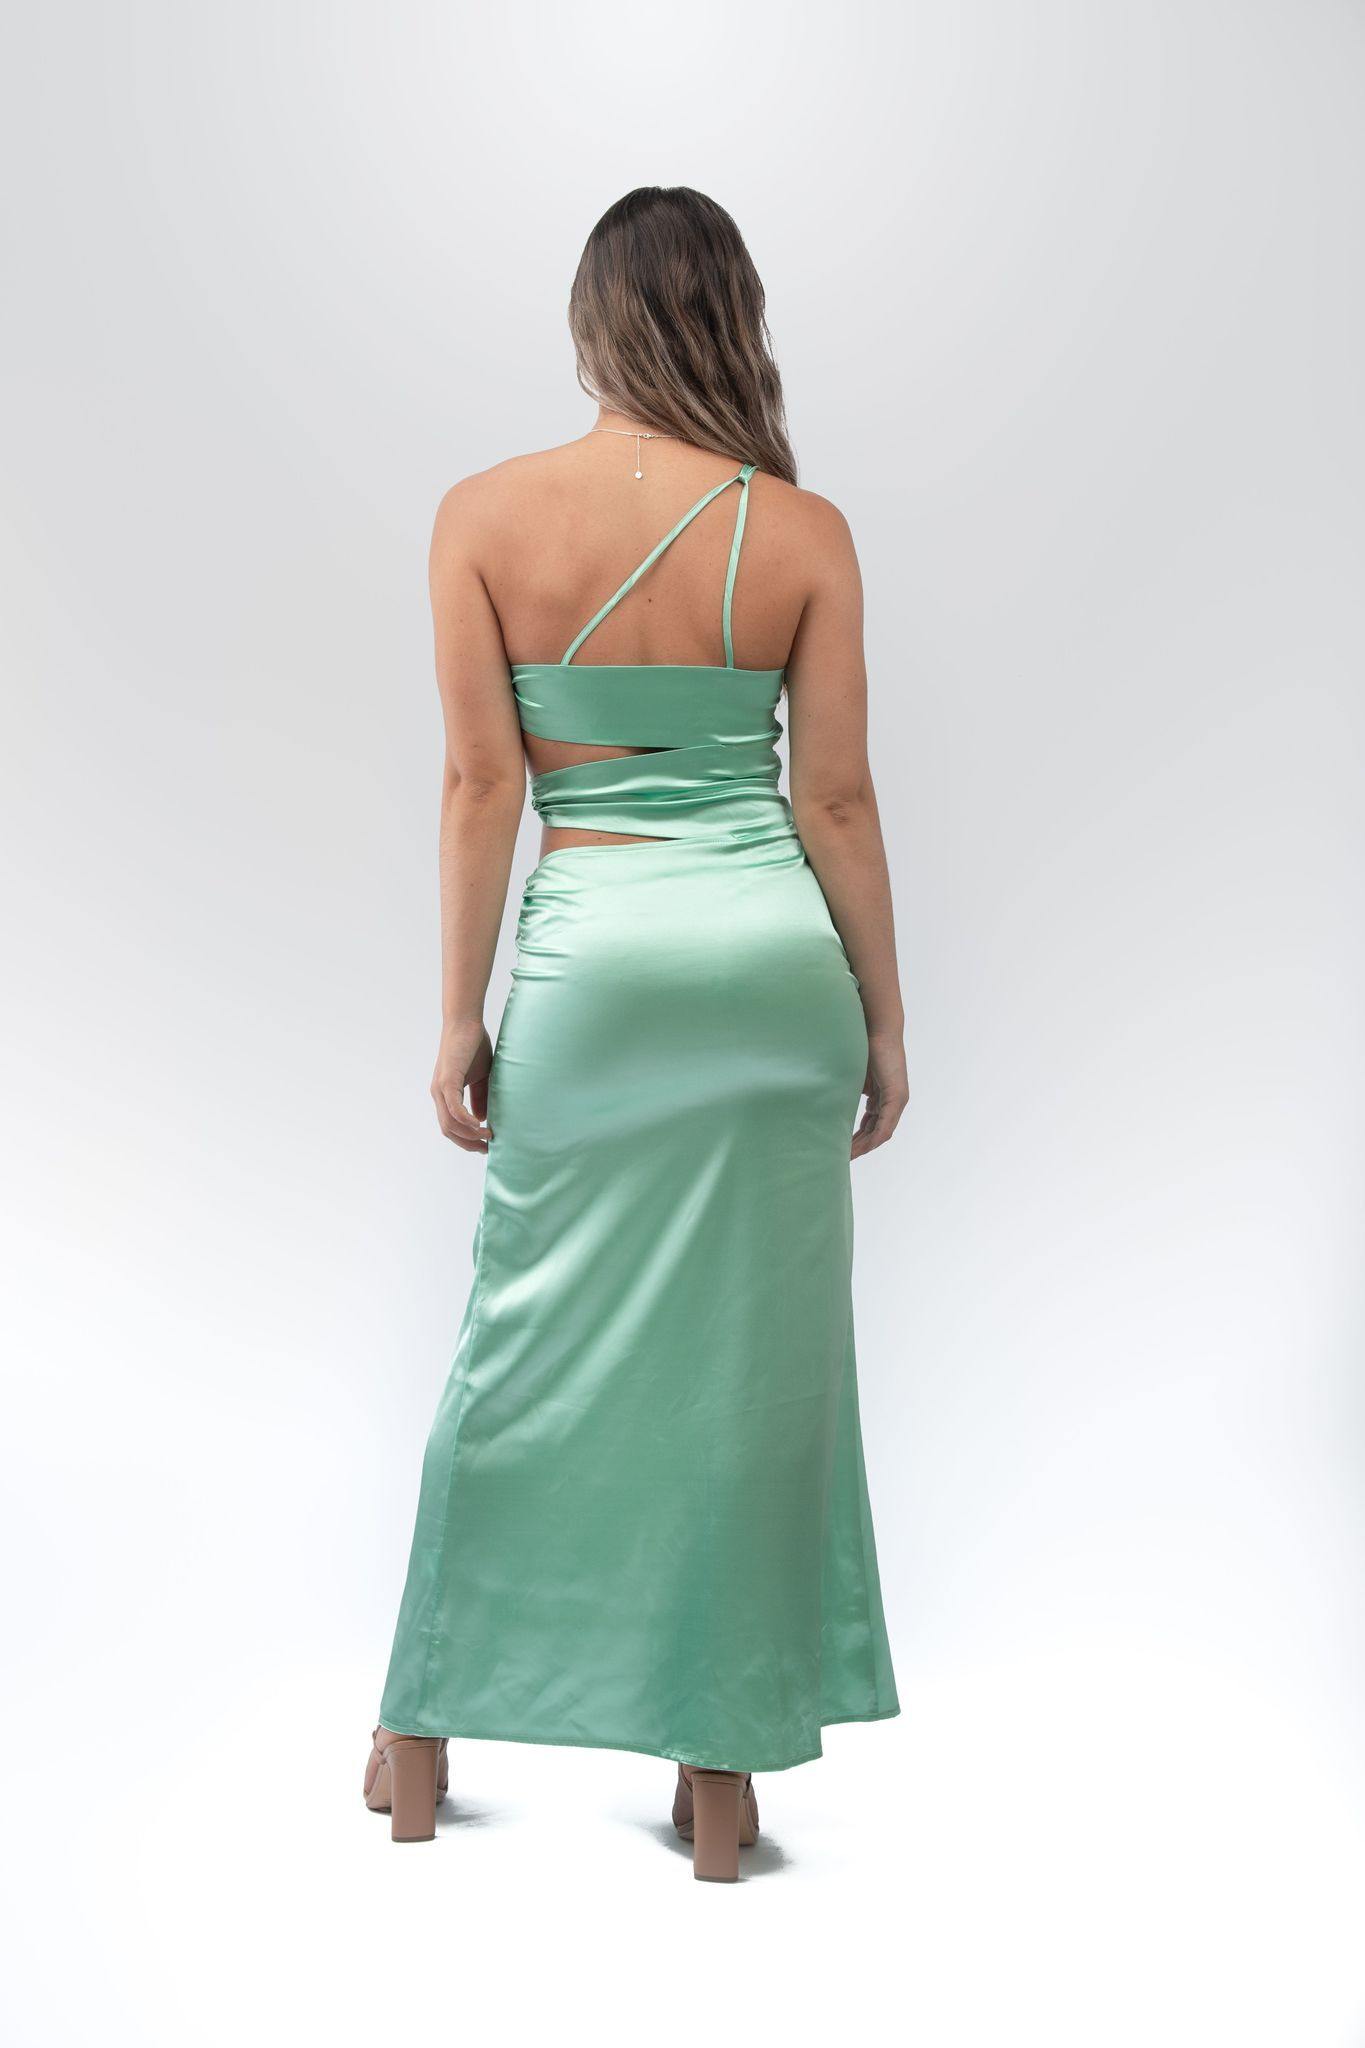 Triple O Ring Thigh Split Dress in Emerald Green - watts that trend